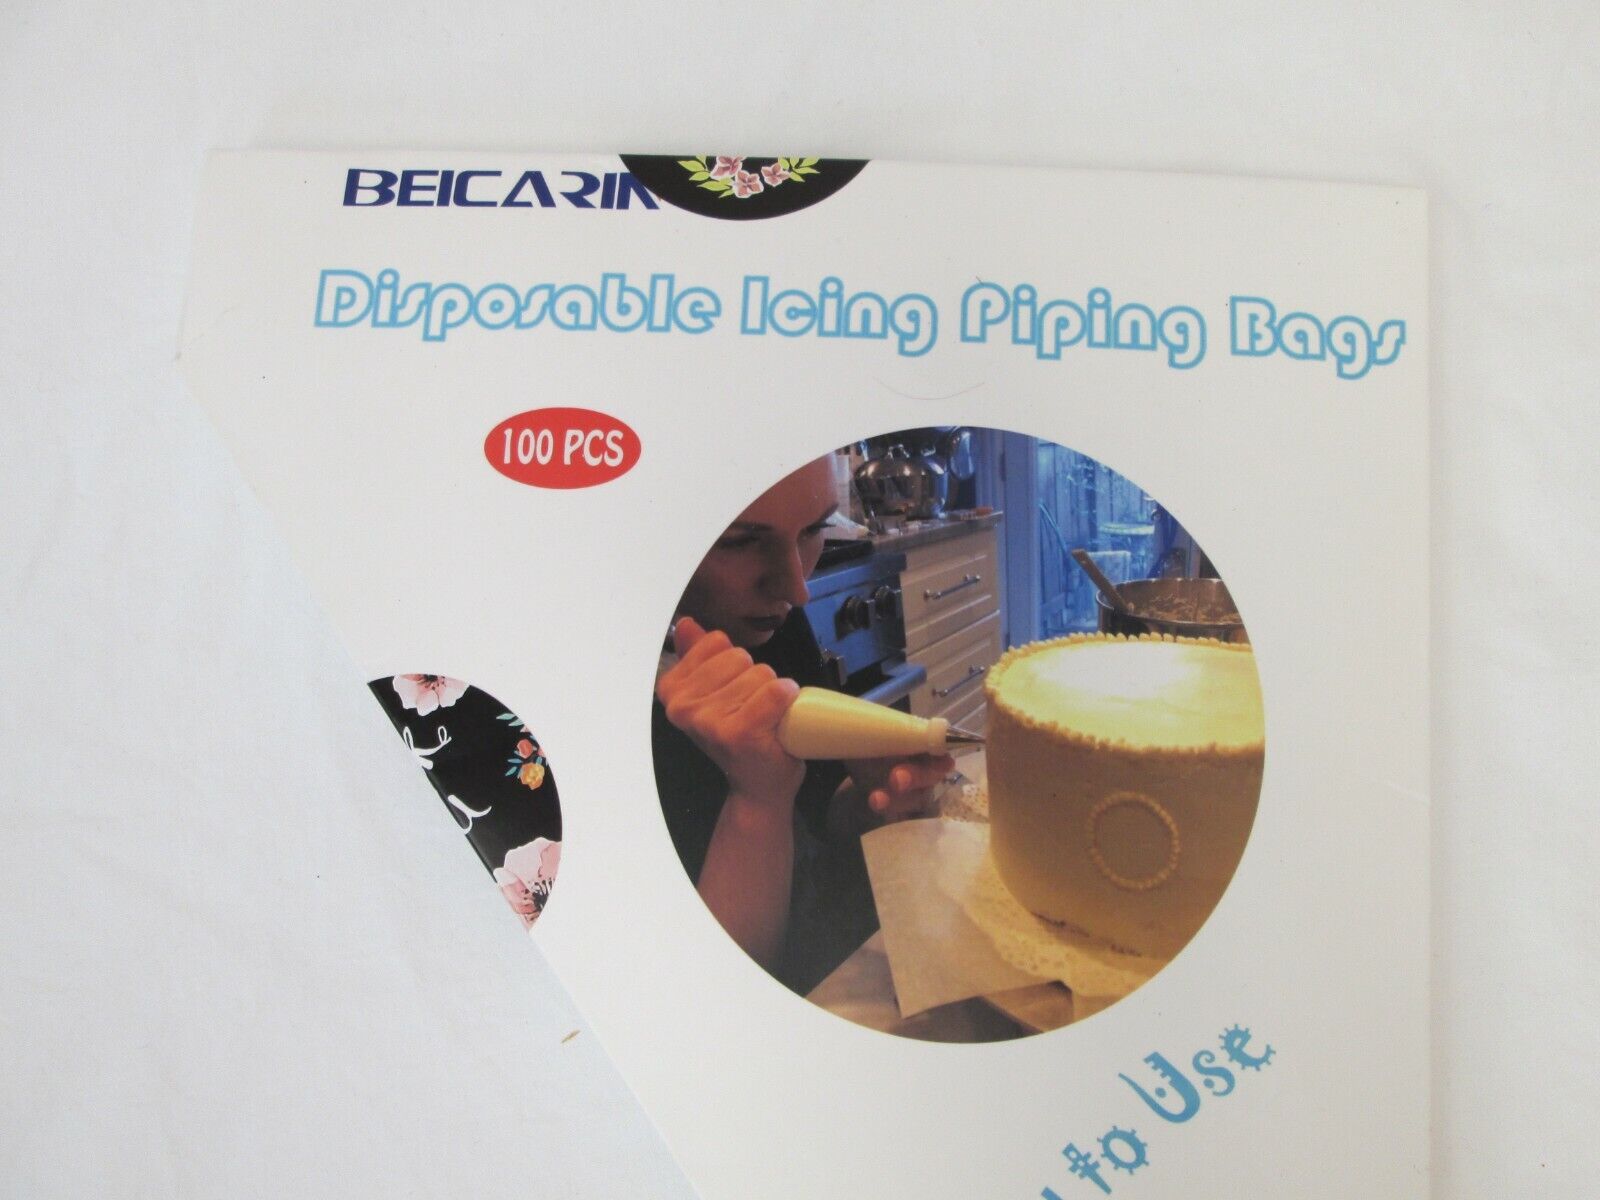 Beicarin Disposable Icing Piping Bags 100 Pcs. Nip